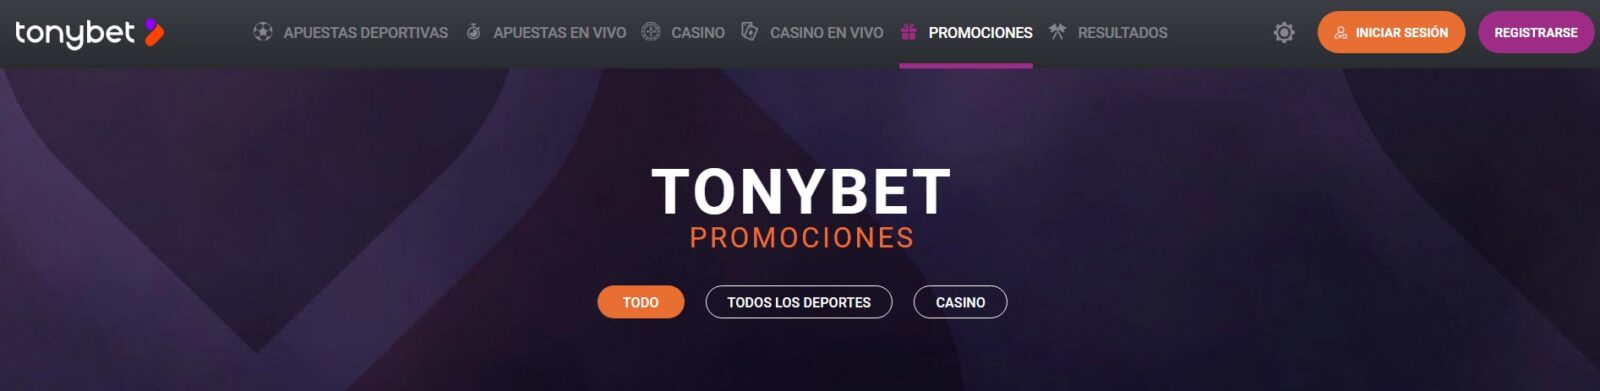 Bonos de Casino disponibles en Tonybet